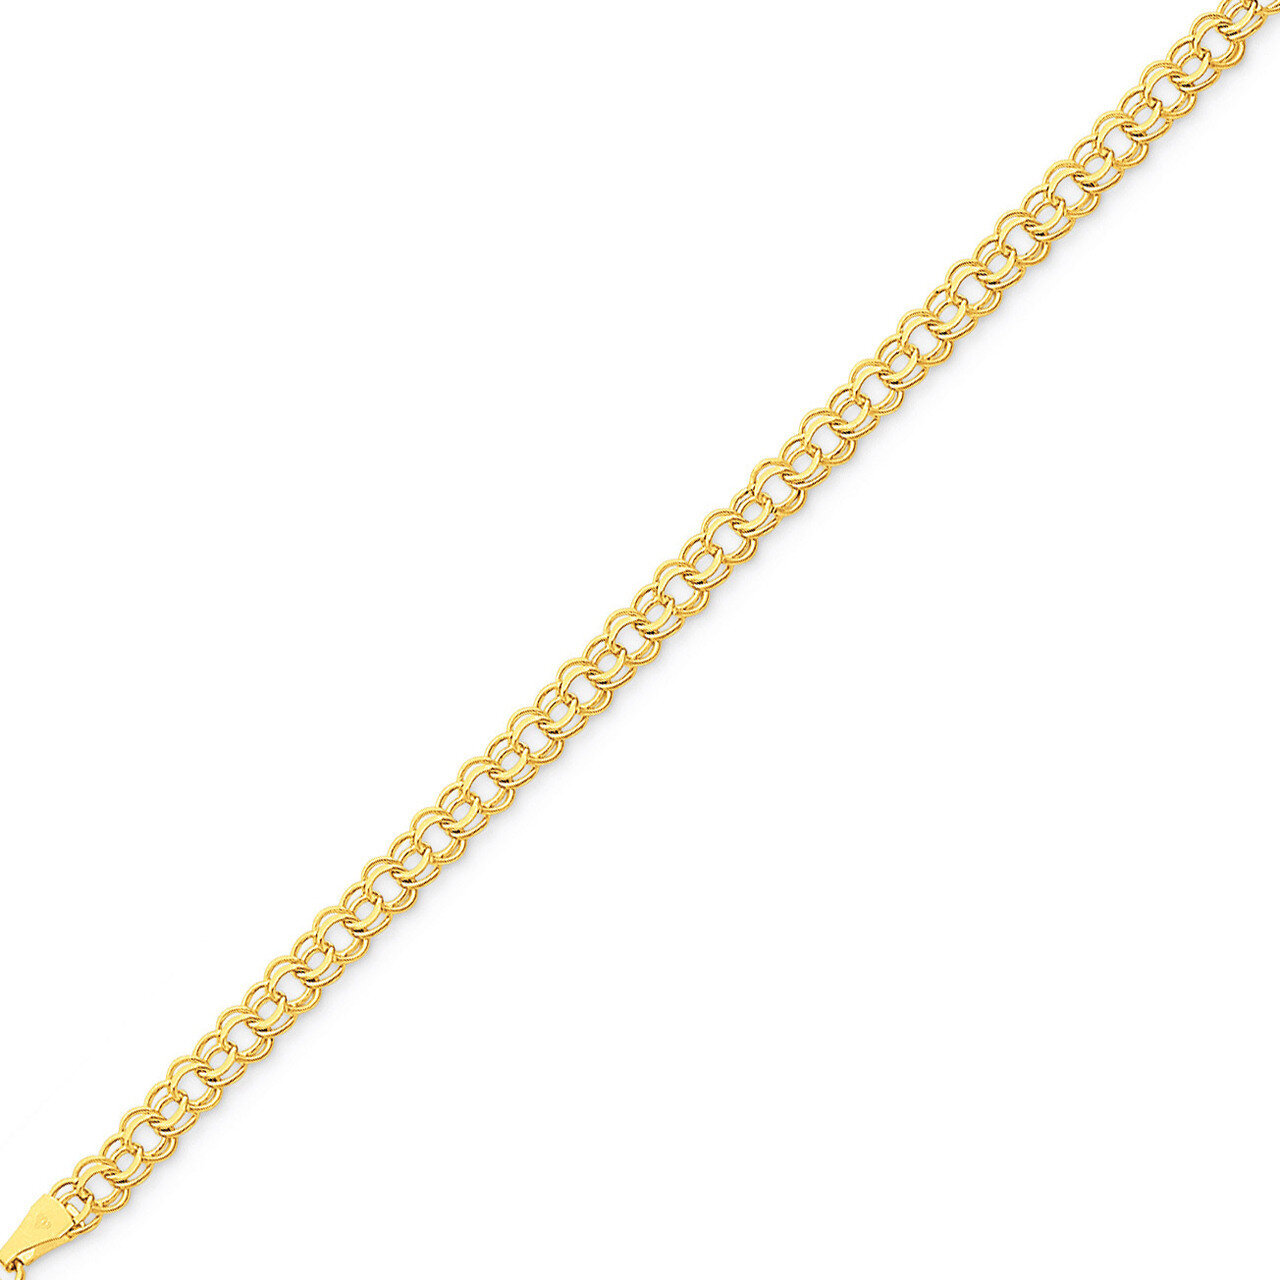 Double Link Charm Bracelet 7 Inch 14k Gold DO502-7